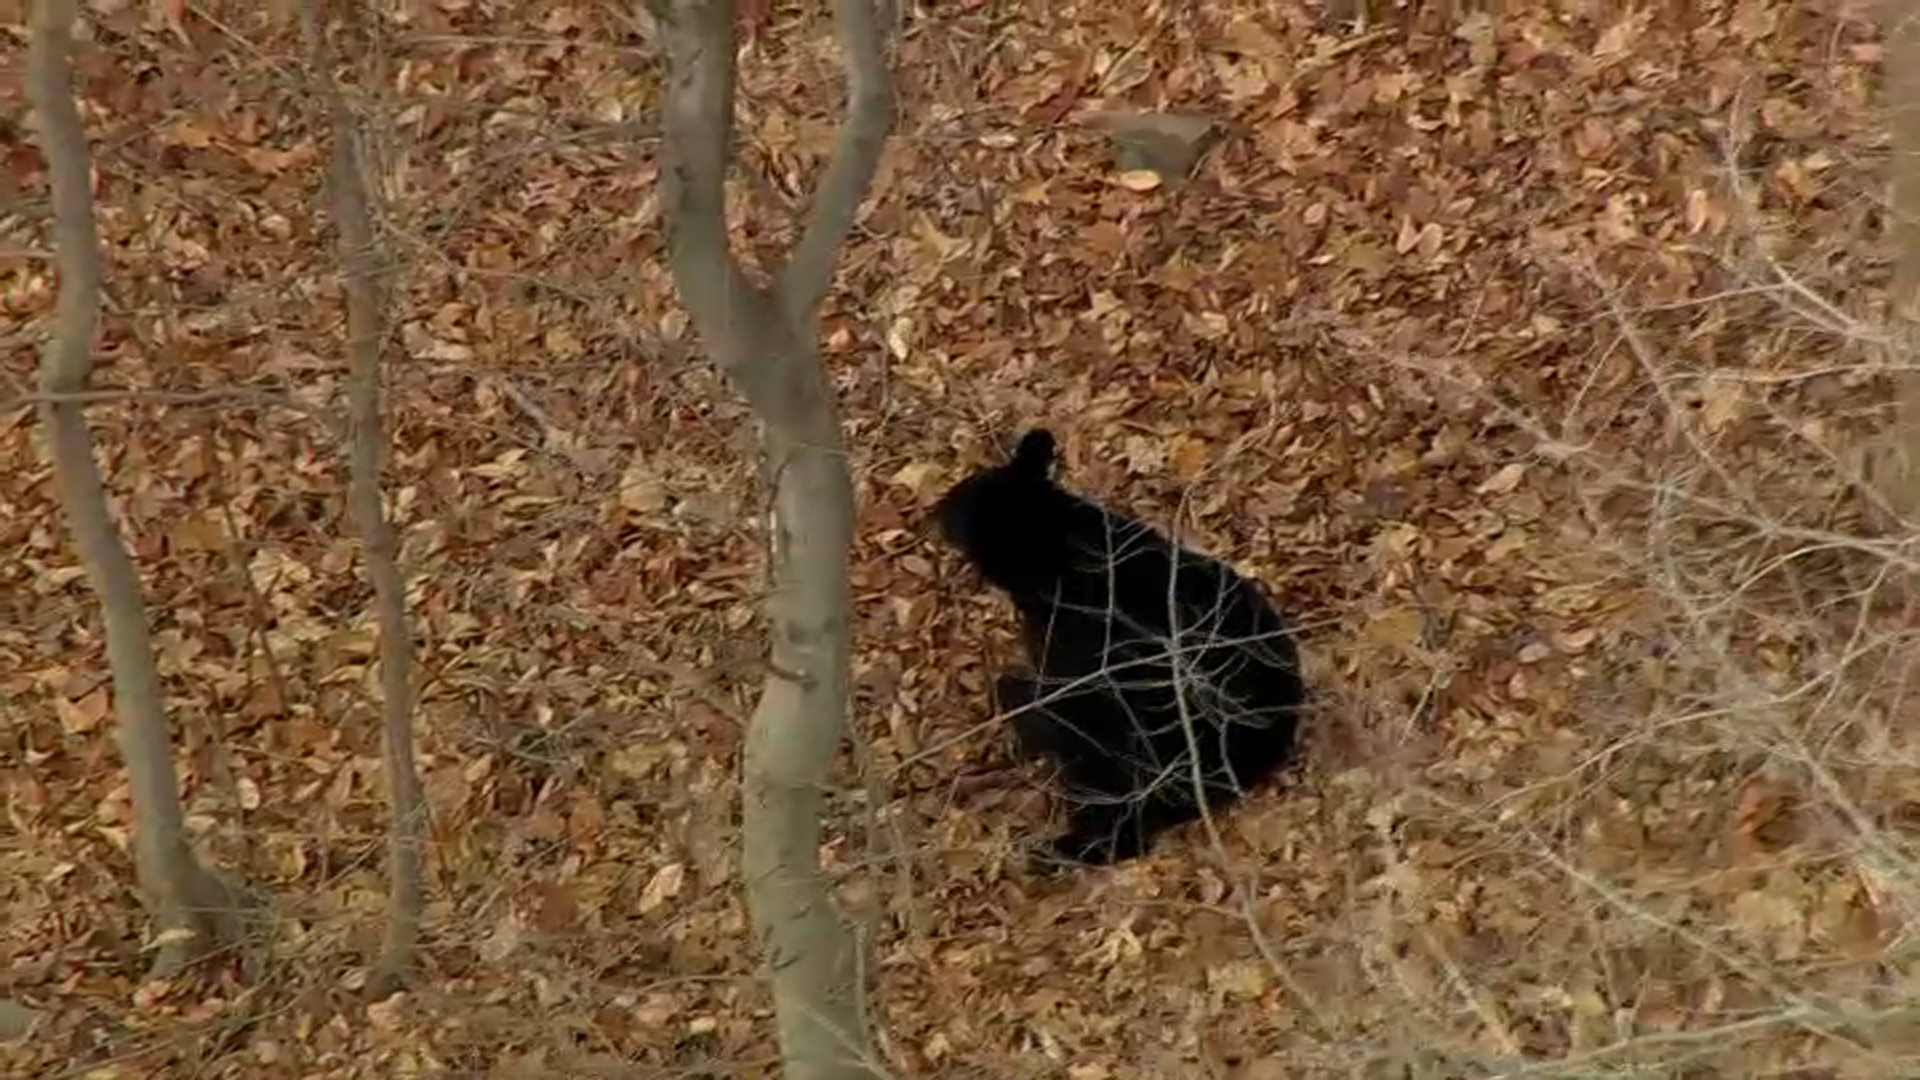 Black Bear Runs Through Wilmington Yards, Successfully Escapes
Would-Be Human Captors